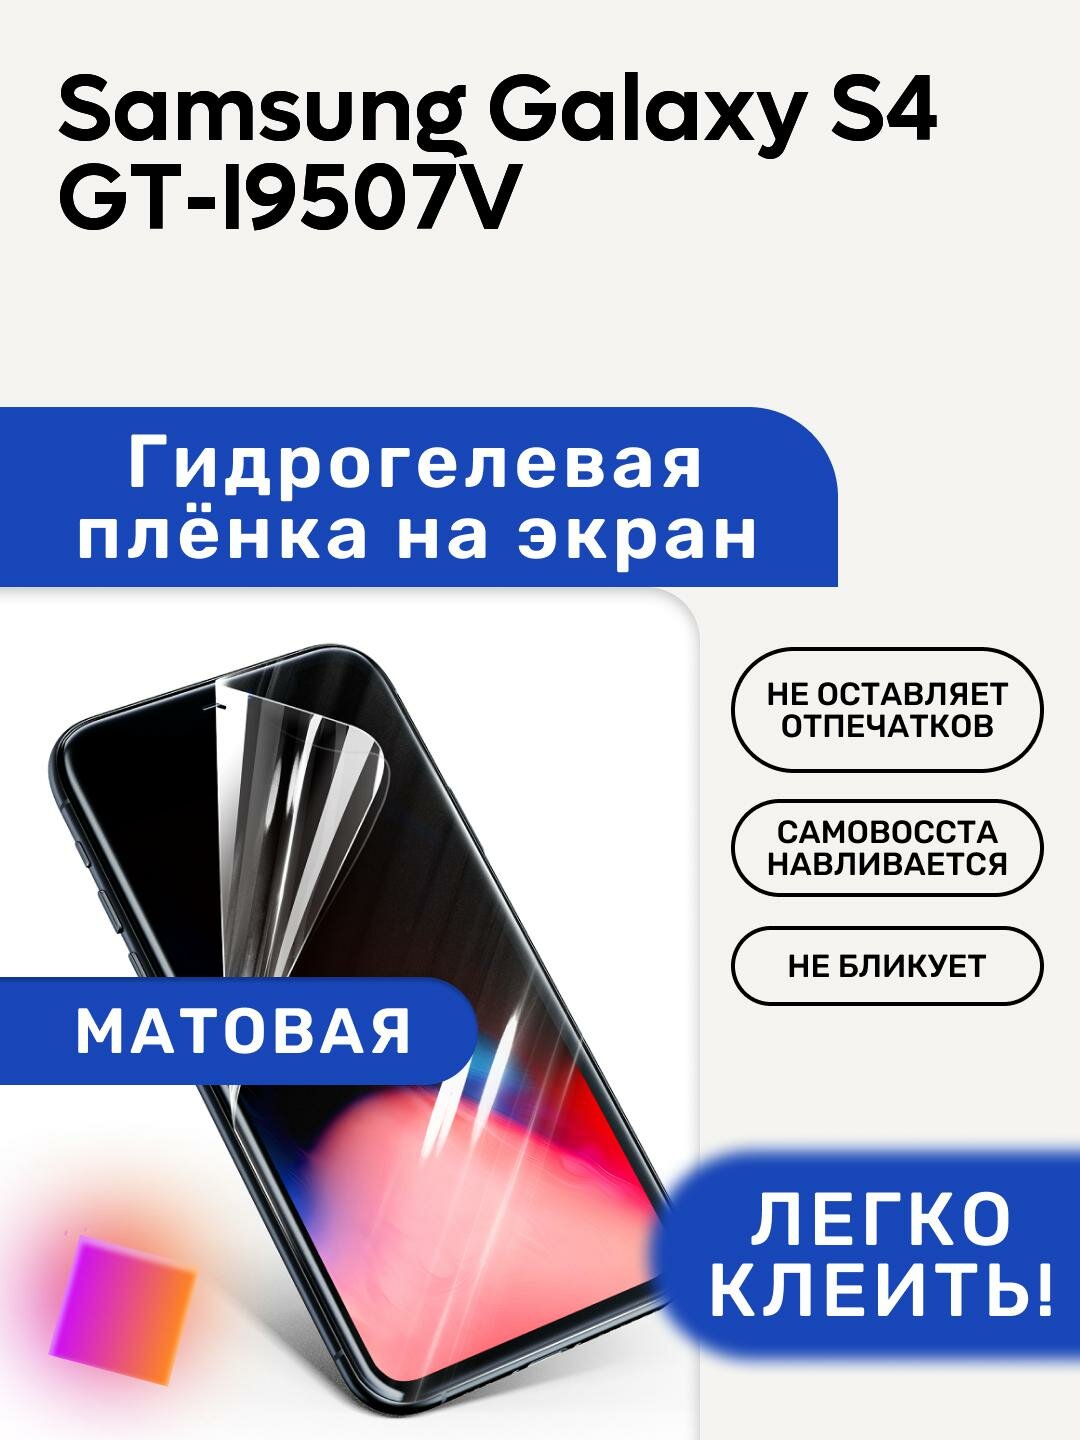 Матовая Гидрогелевая плёнка, полиуретановая, защита экрана Samsung Galaxy S4 GT-I9507V